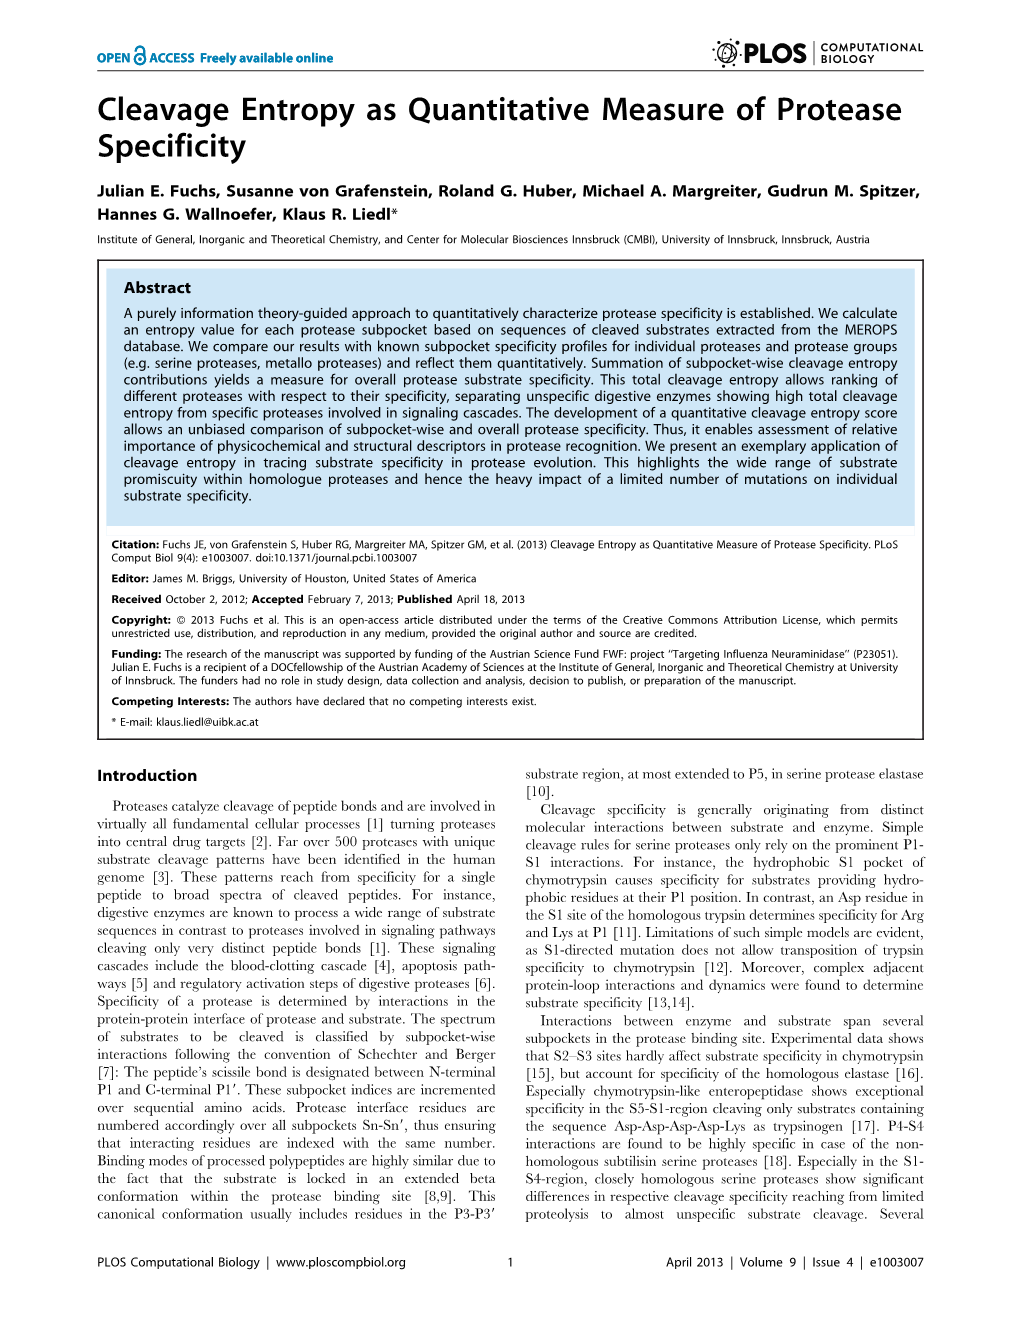 Cleavage Entropy As Quantitative Measure of Protease Specificity